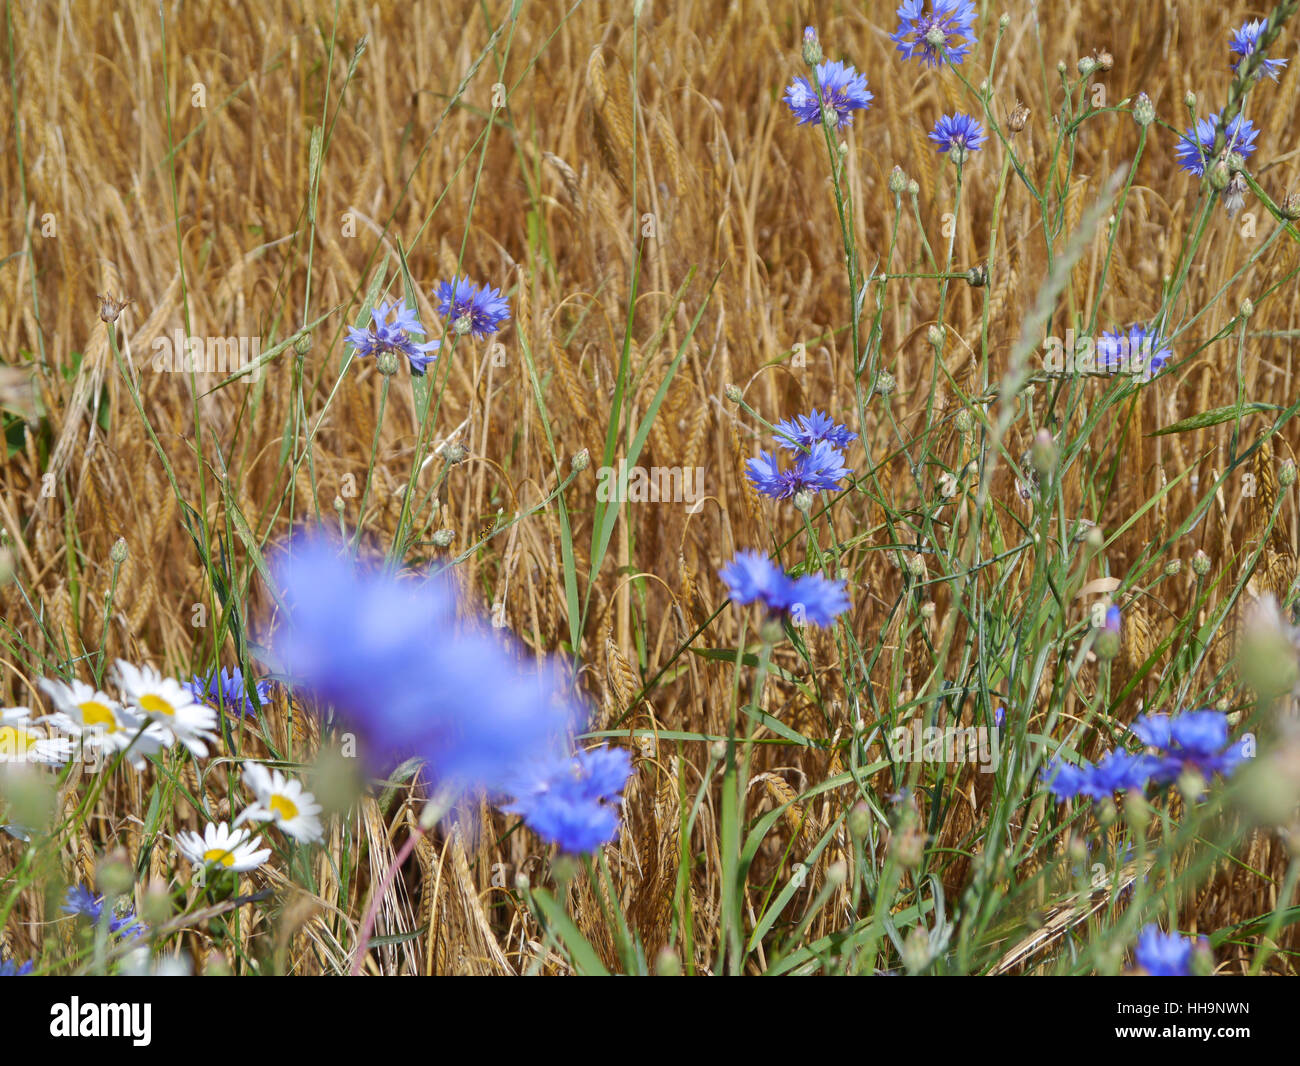 cornflowers in a barley field Stock Photo